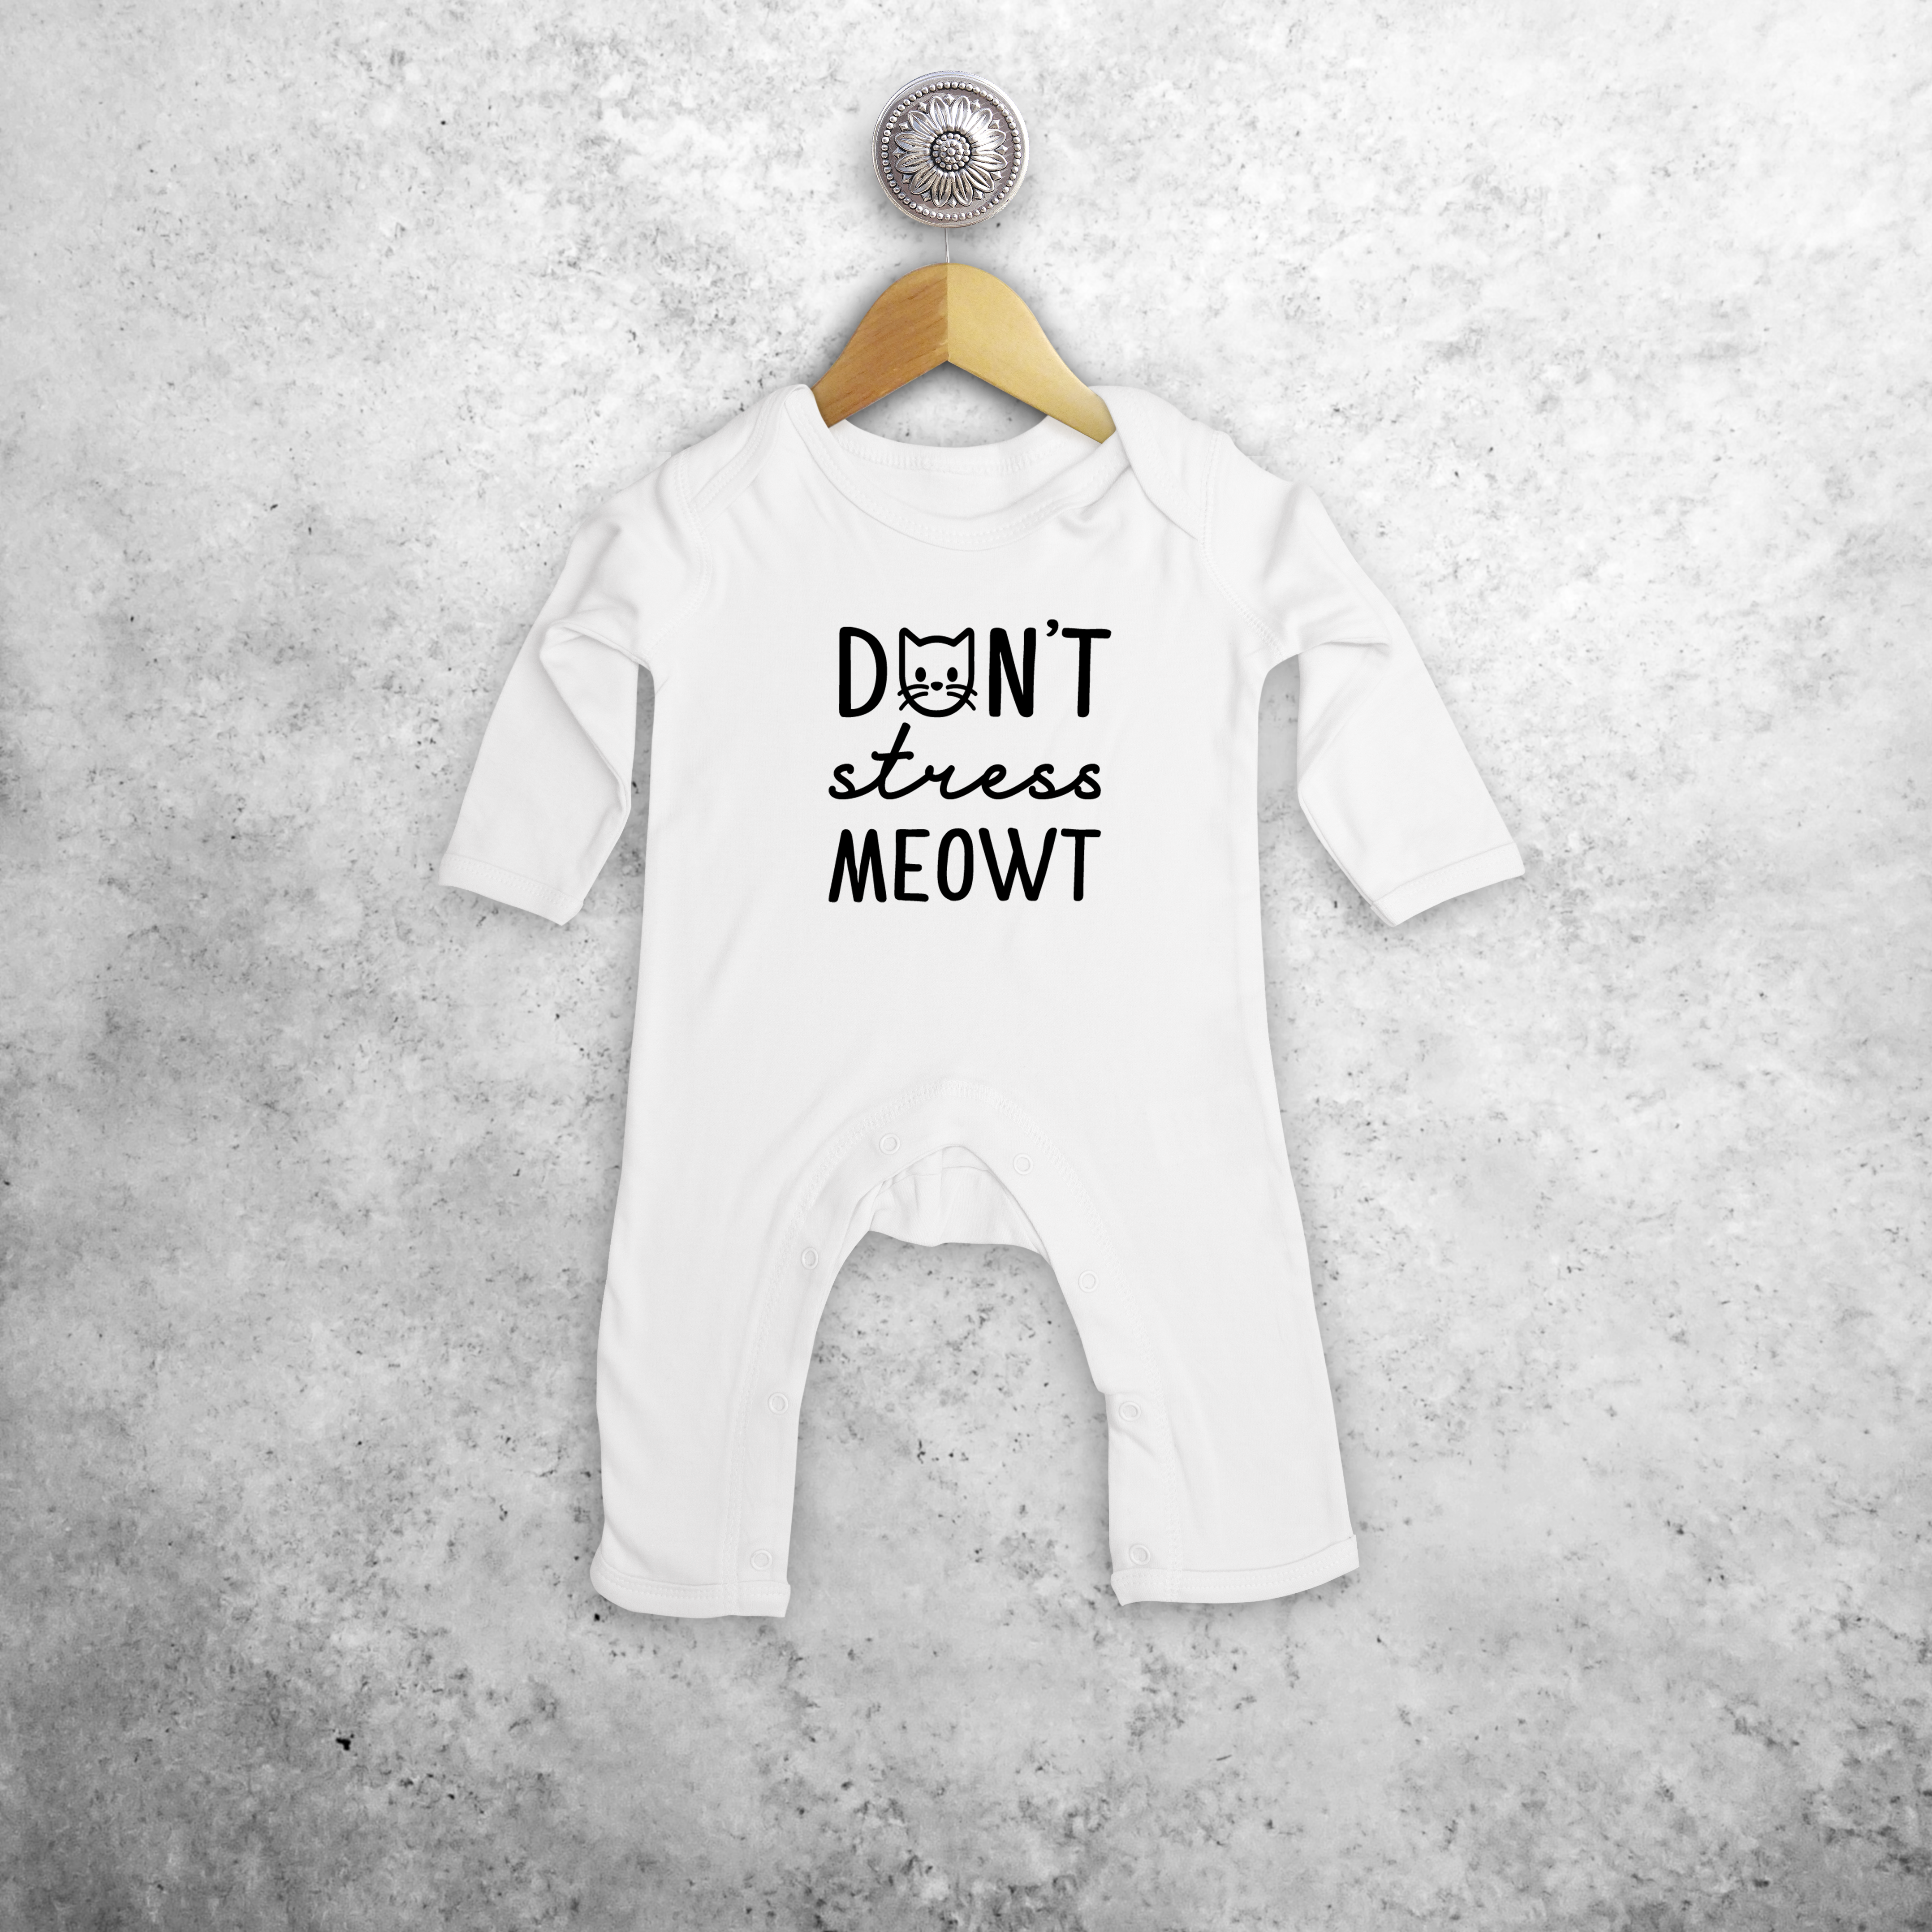 'Don't stress meowt' baby romper